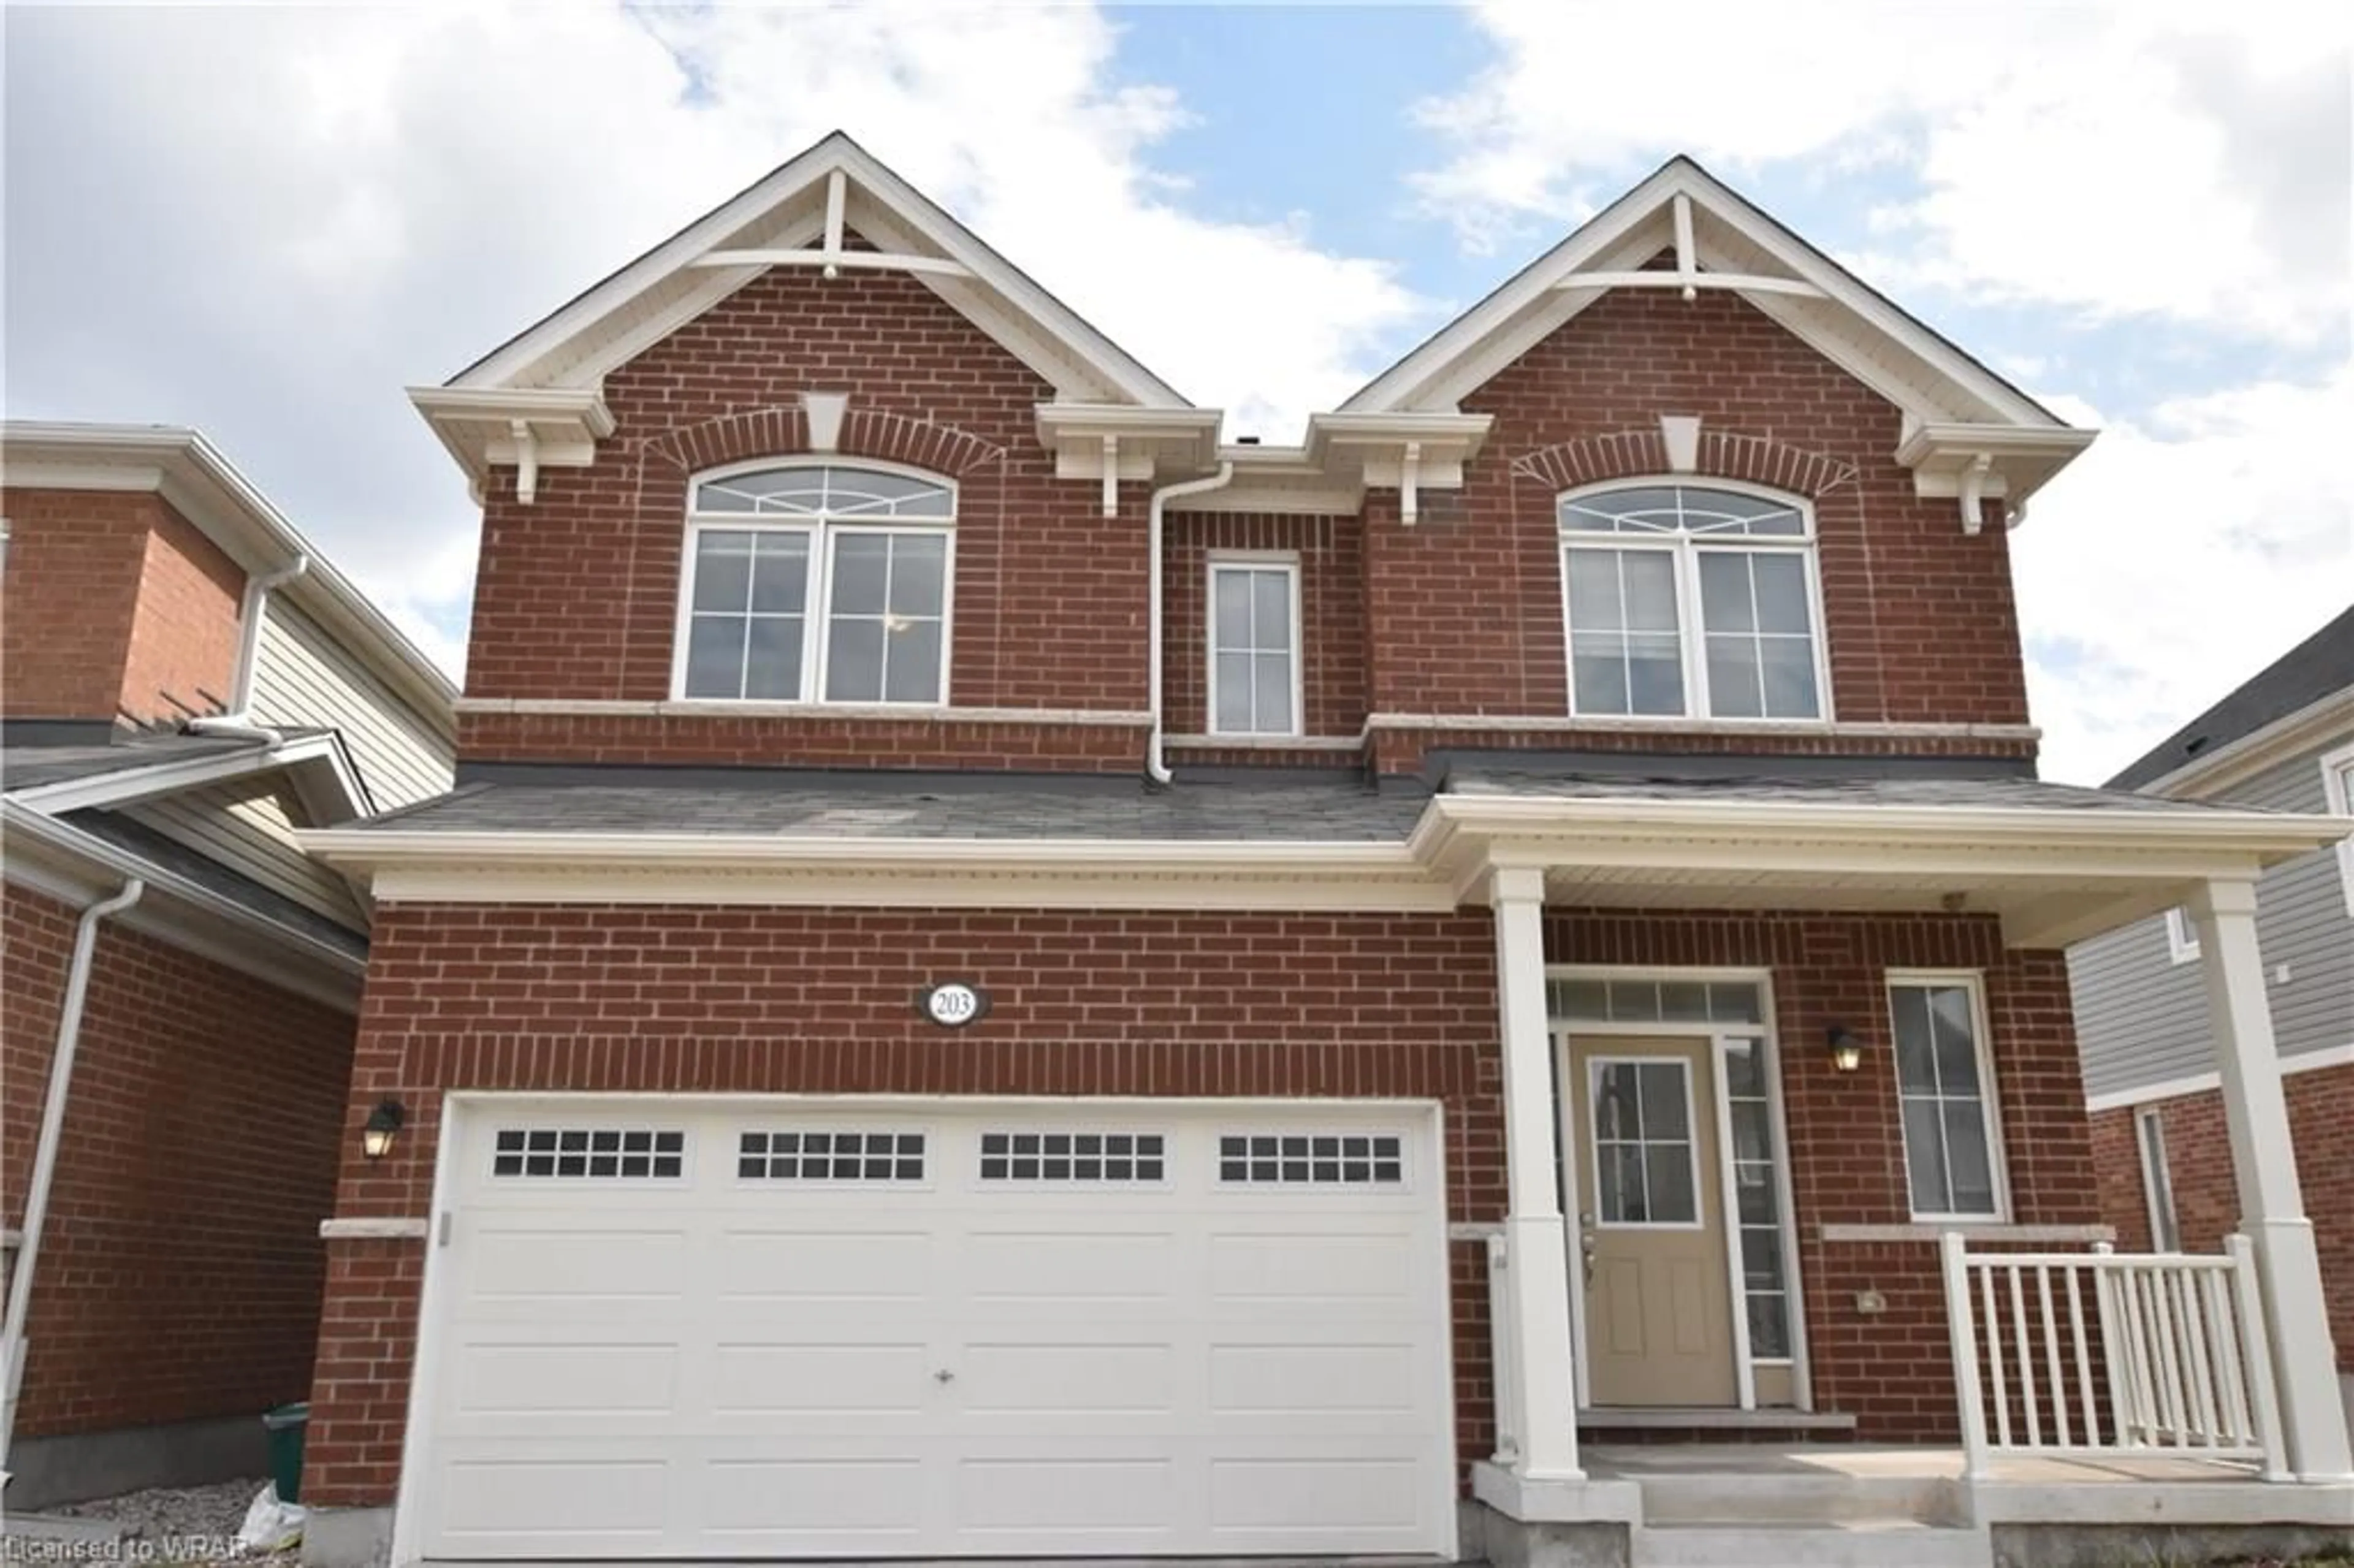 Home with brick exterior material for 203 Ridge Rd, Cambridge Ontario N3E 0C3